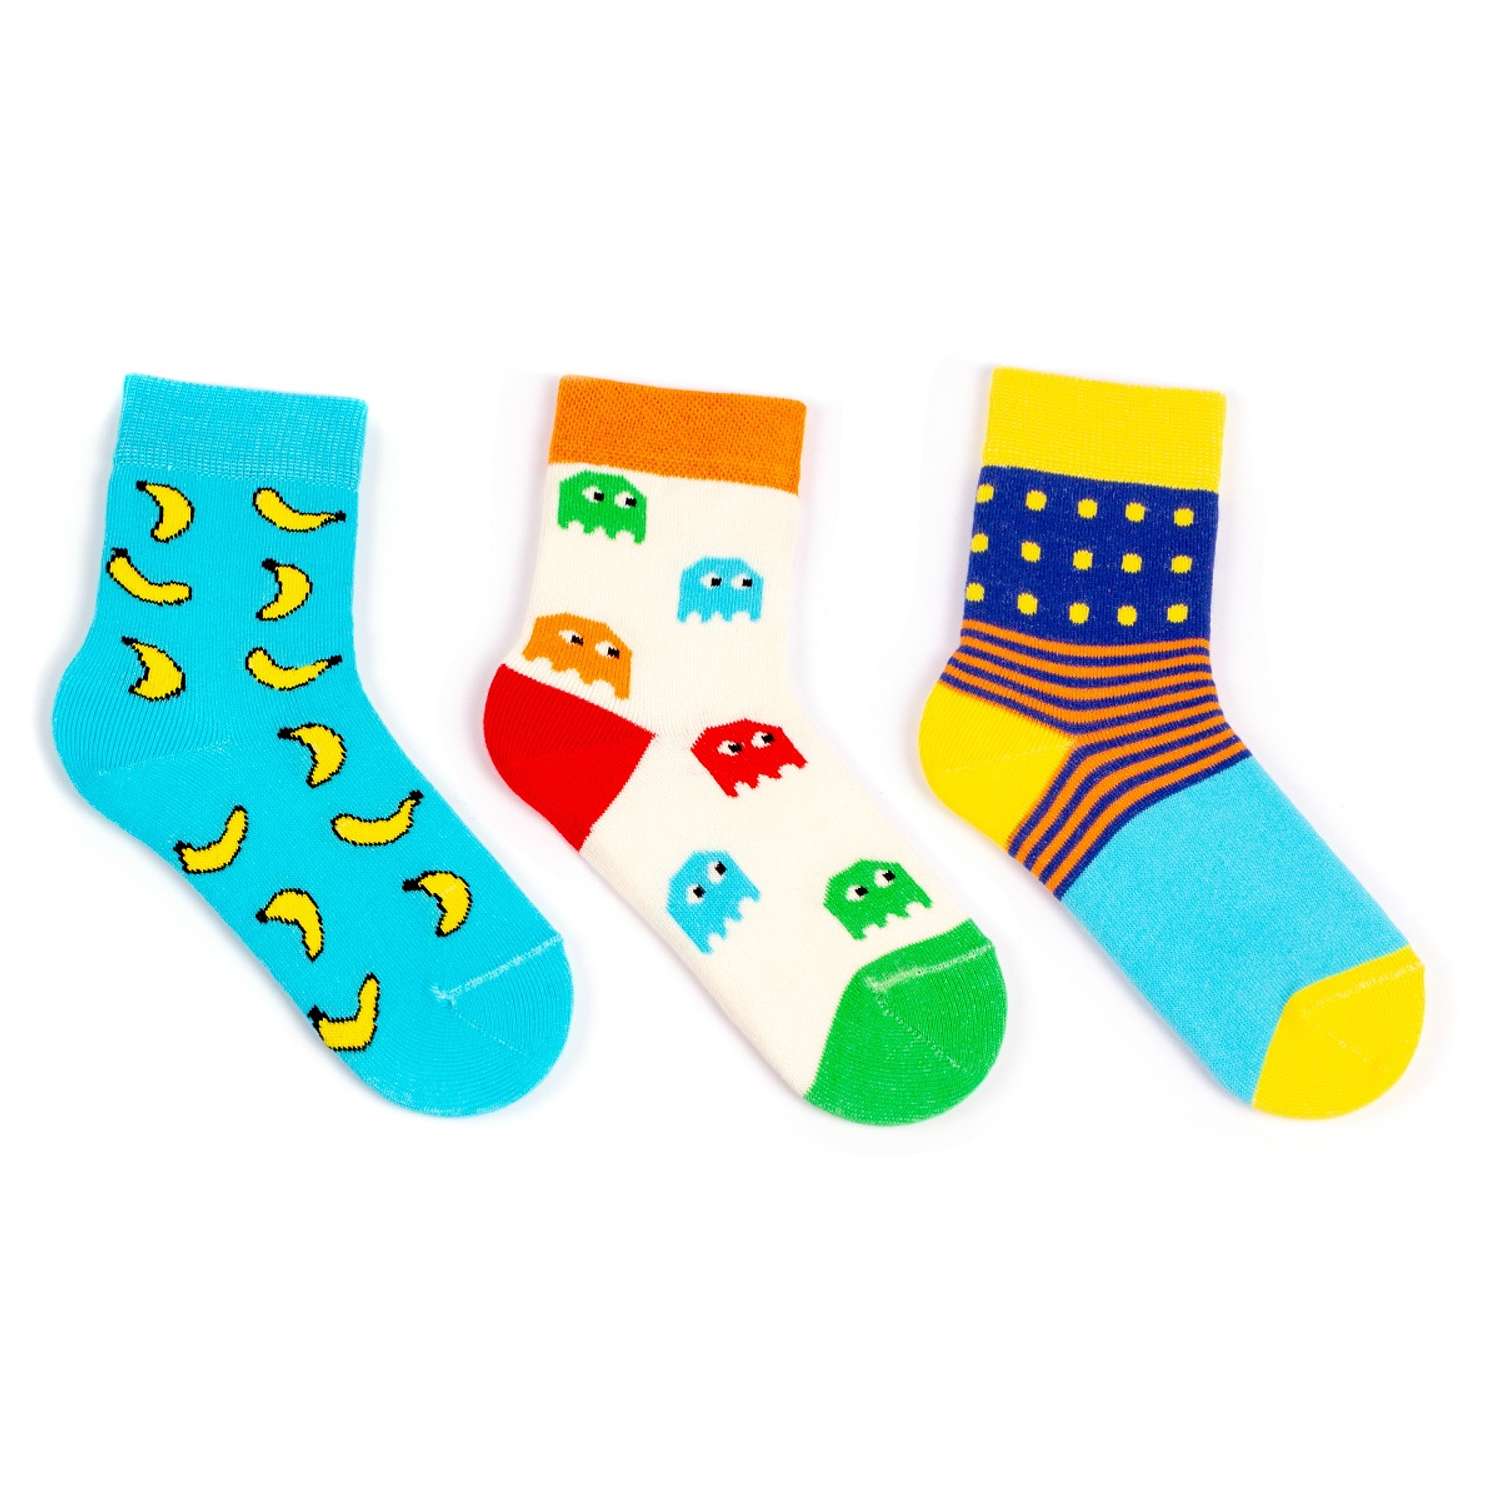 Игра носочки. Носки для детей. Яркие детские носки. Носки детские цветные. Носки разноцветные для детей.